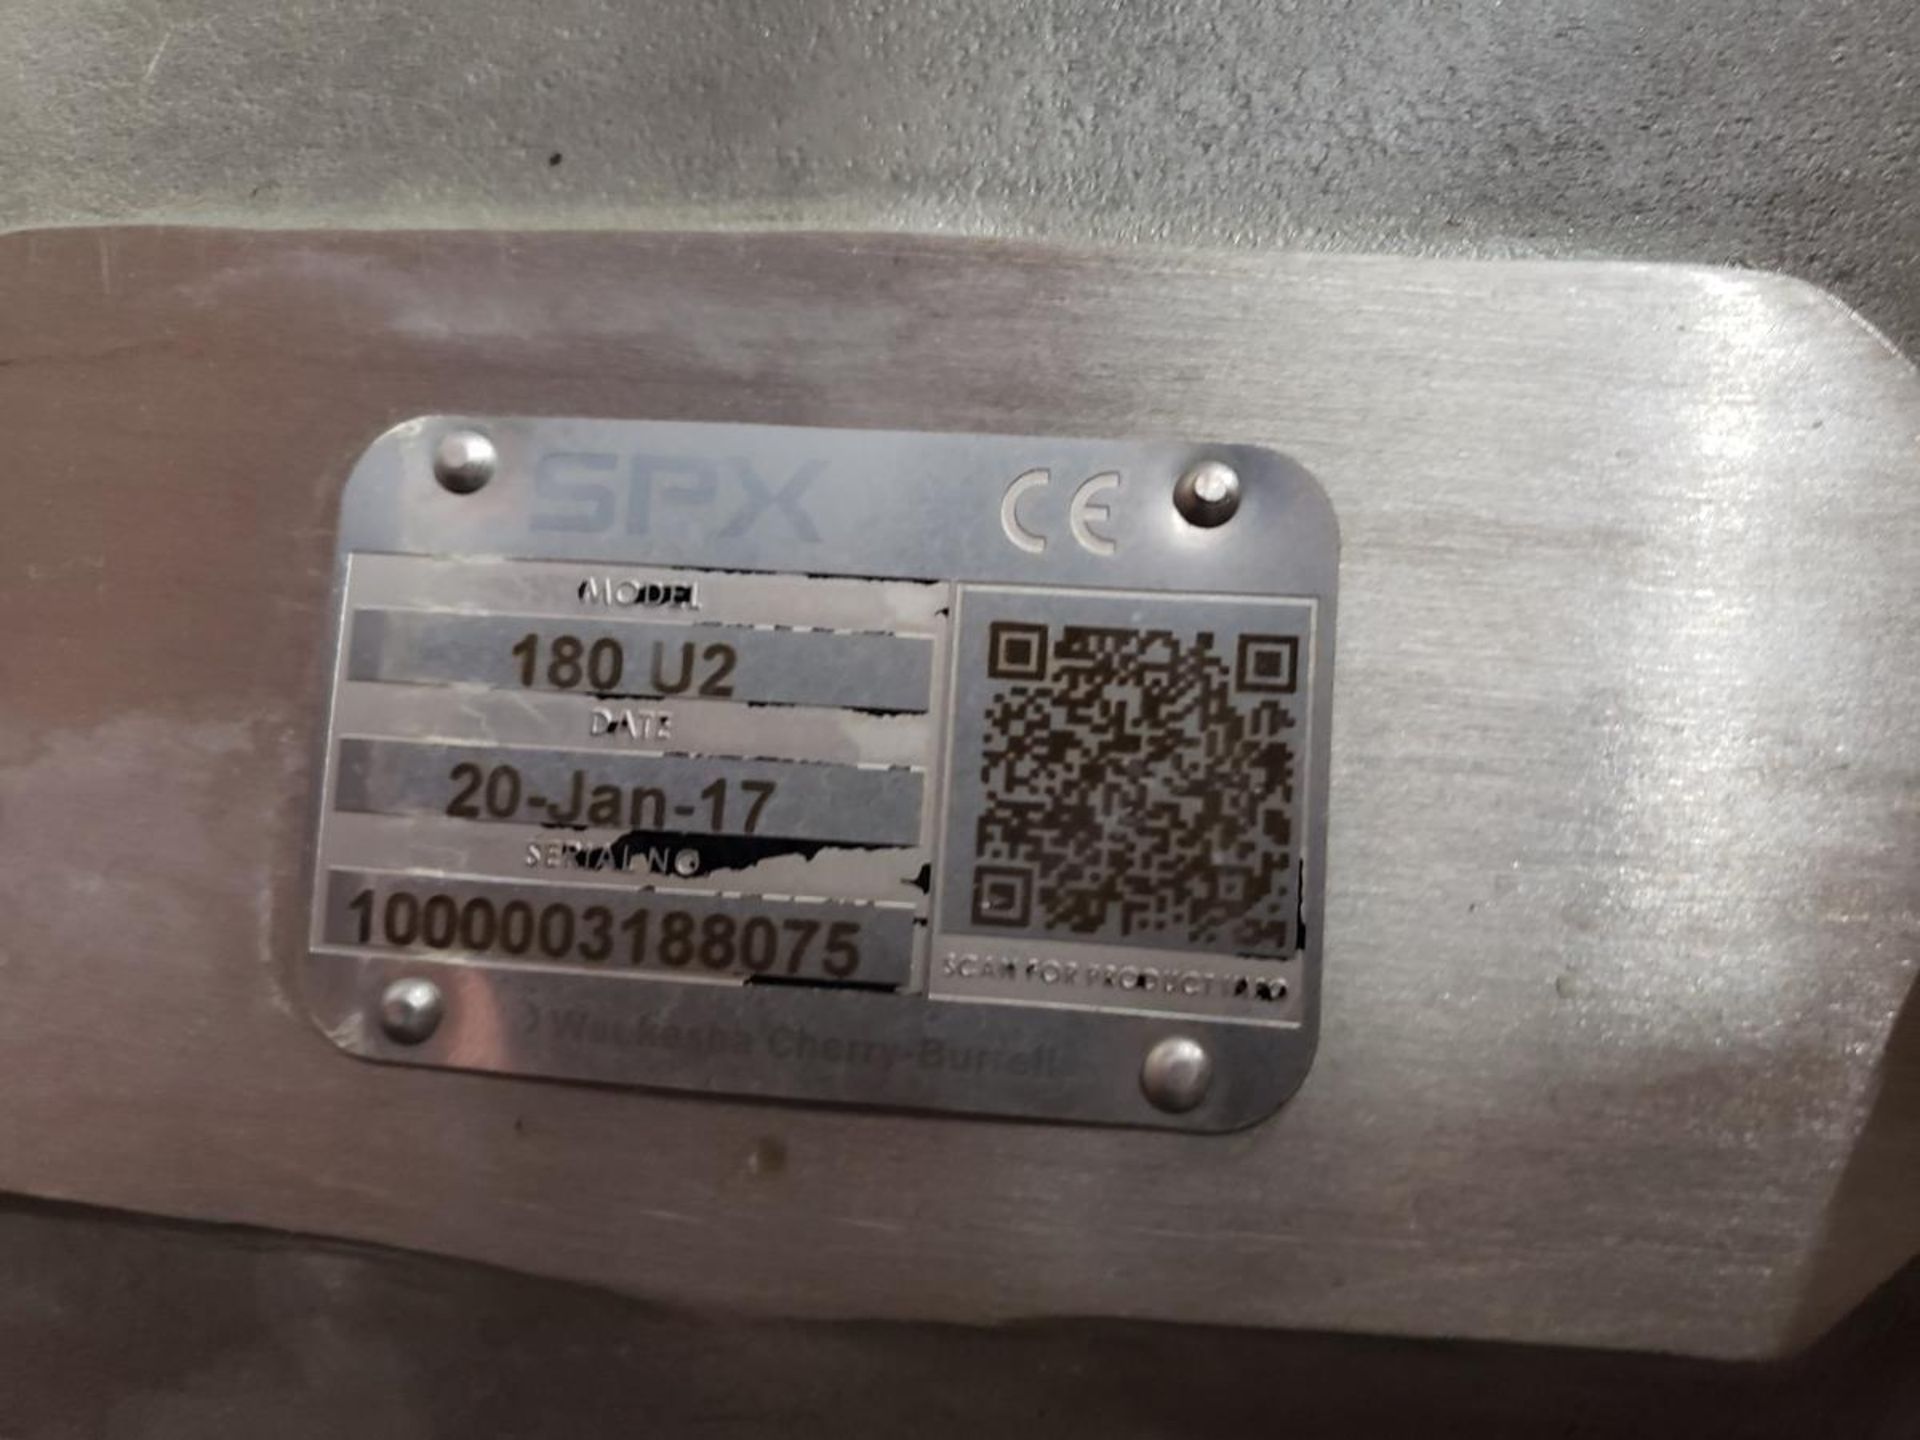 Waukesha Cherry Burrell SPX Positive Displacement Pump, M# 180-U2, S/N 1000003188075 | Rig Fee $200 - Image 2 of 3